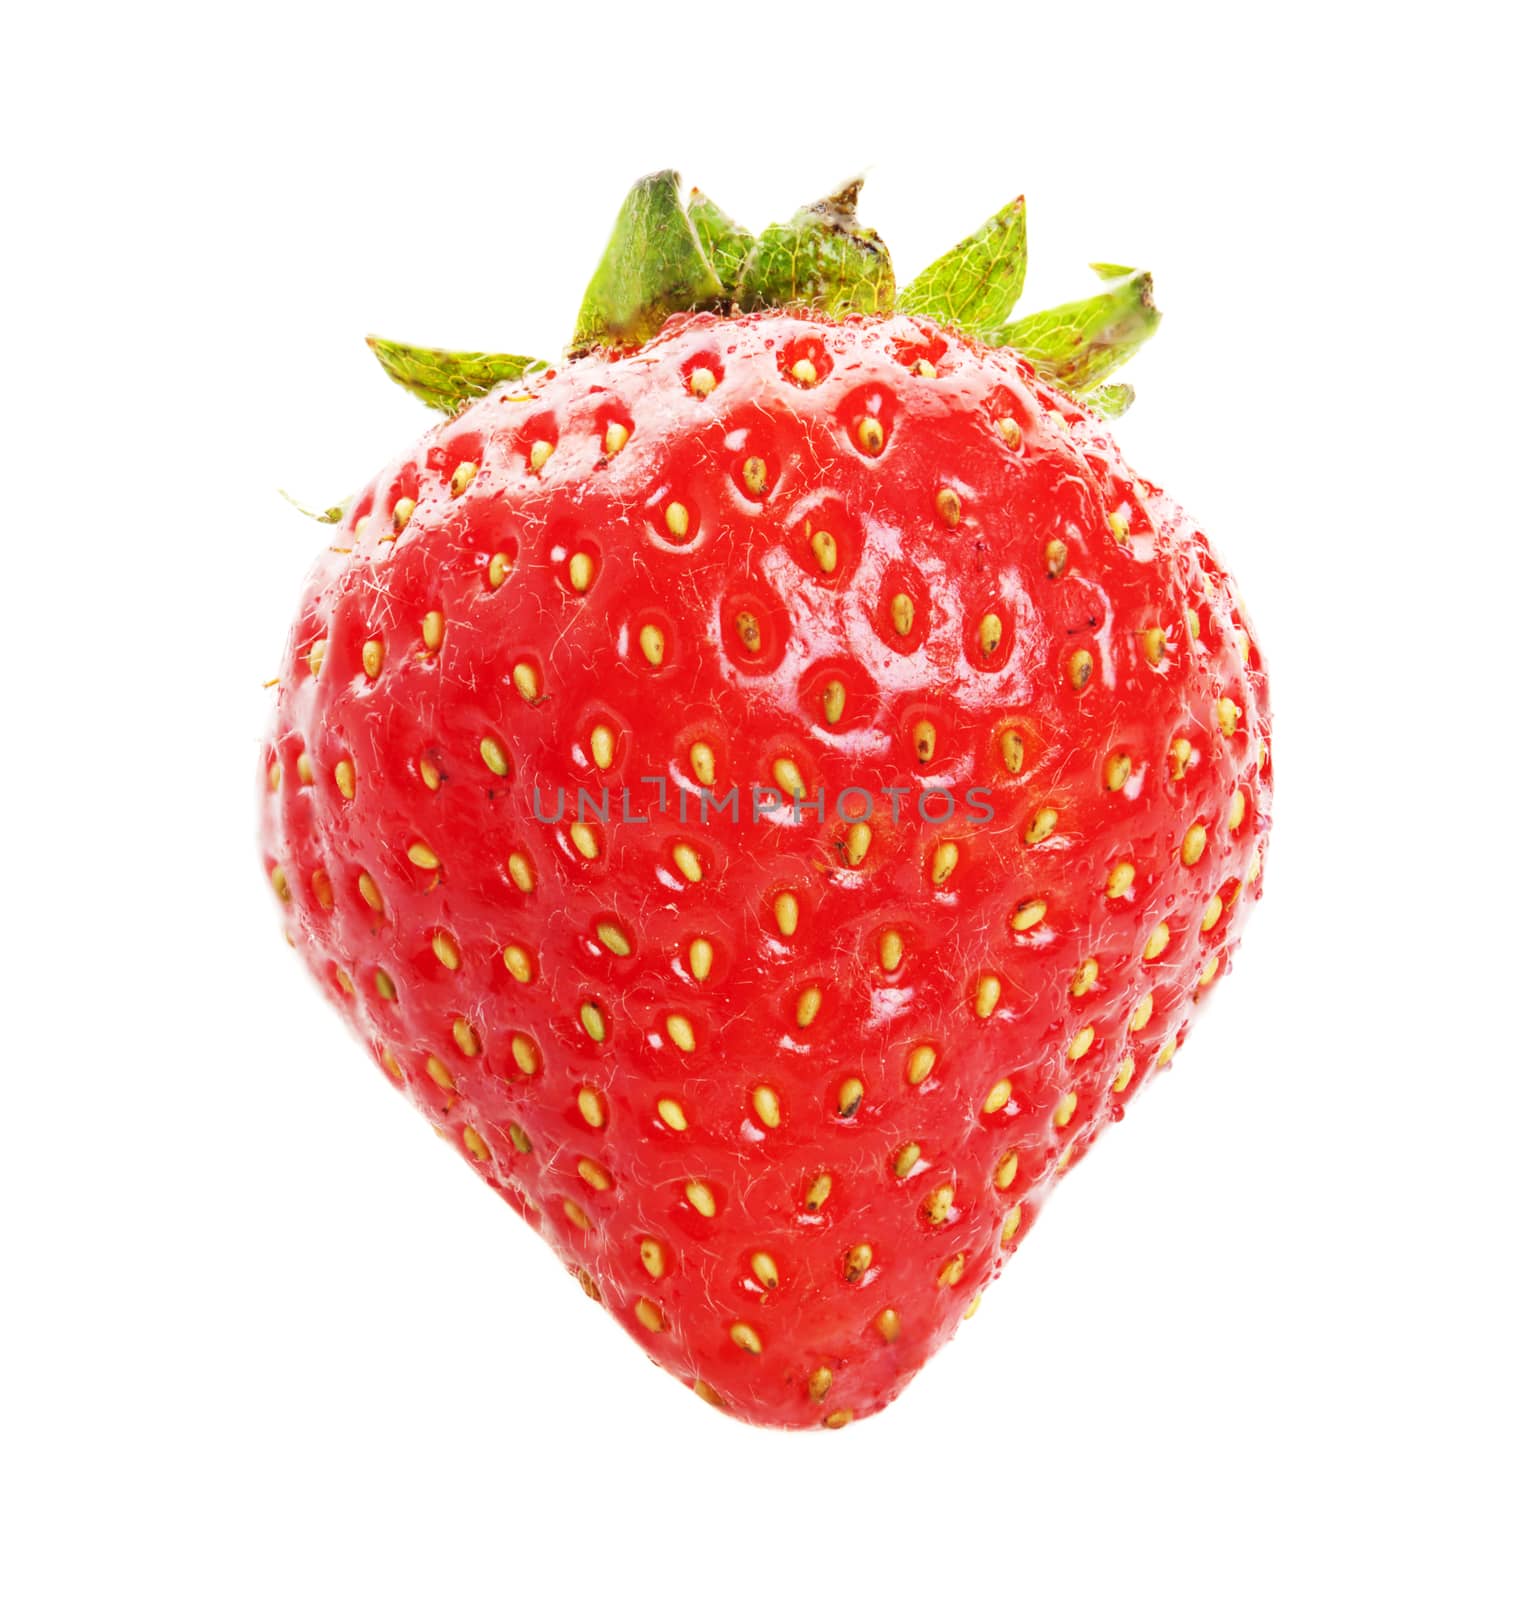 Organic Strawberry by songbird839